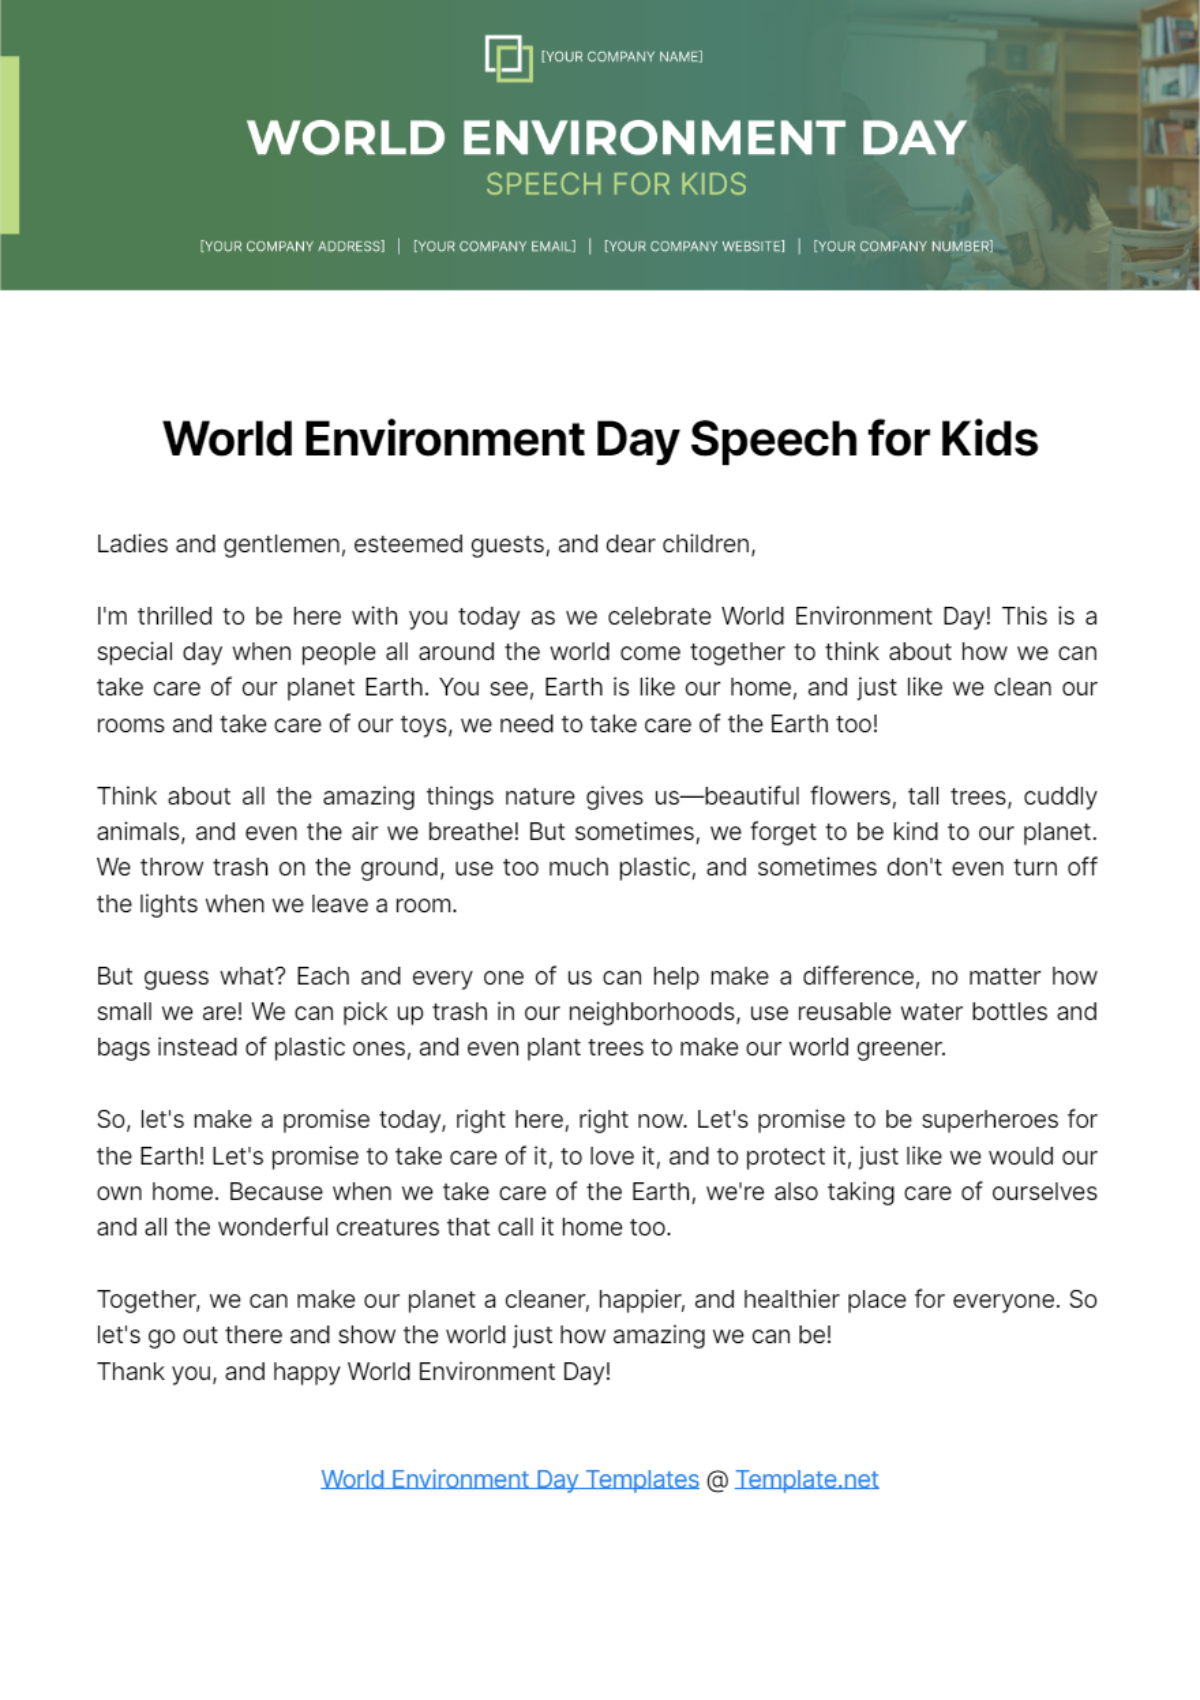 Free World Environment Day Speech for Kids Template